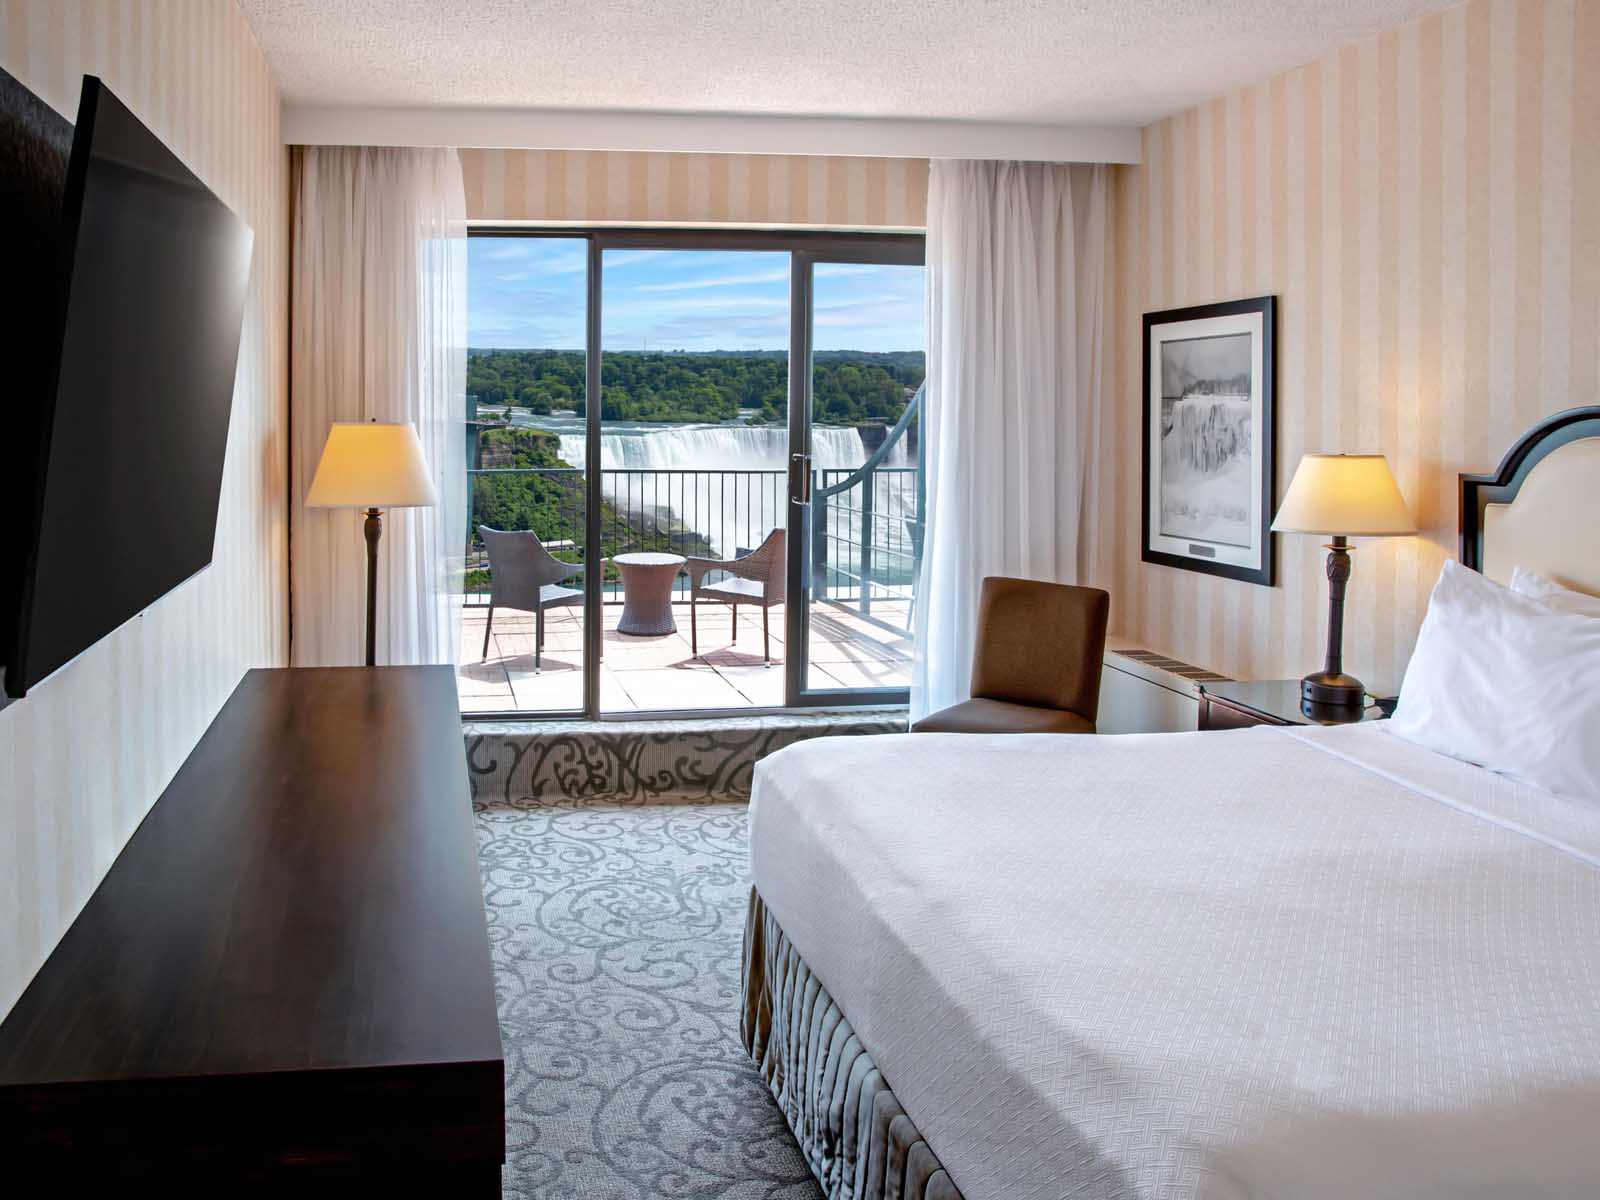 Best Hotels in Niagara Falls Crowne Plaza Fallsview